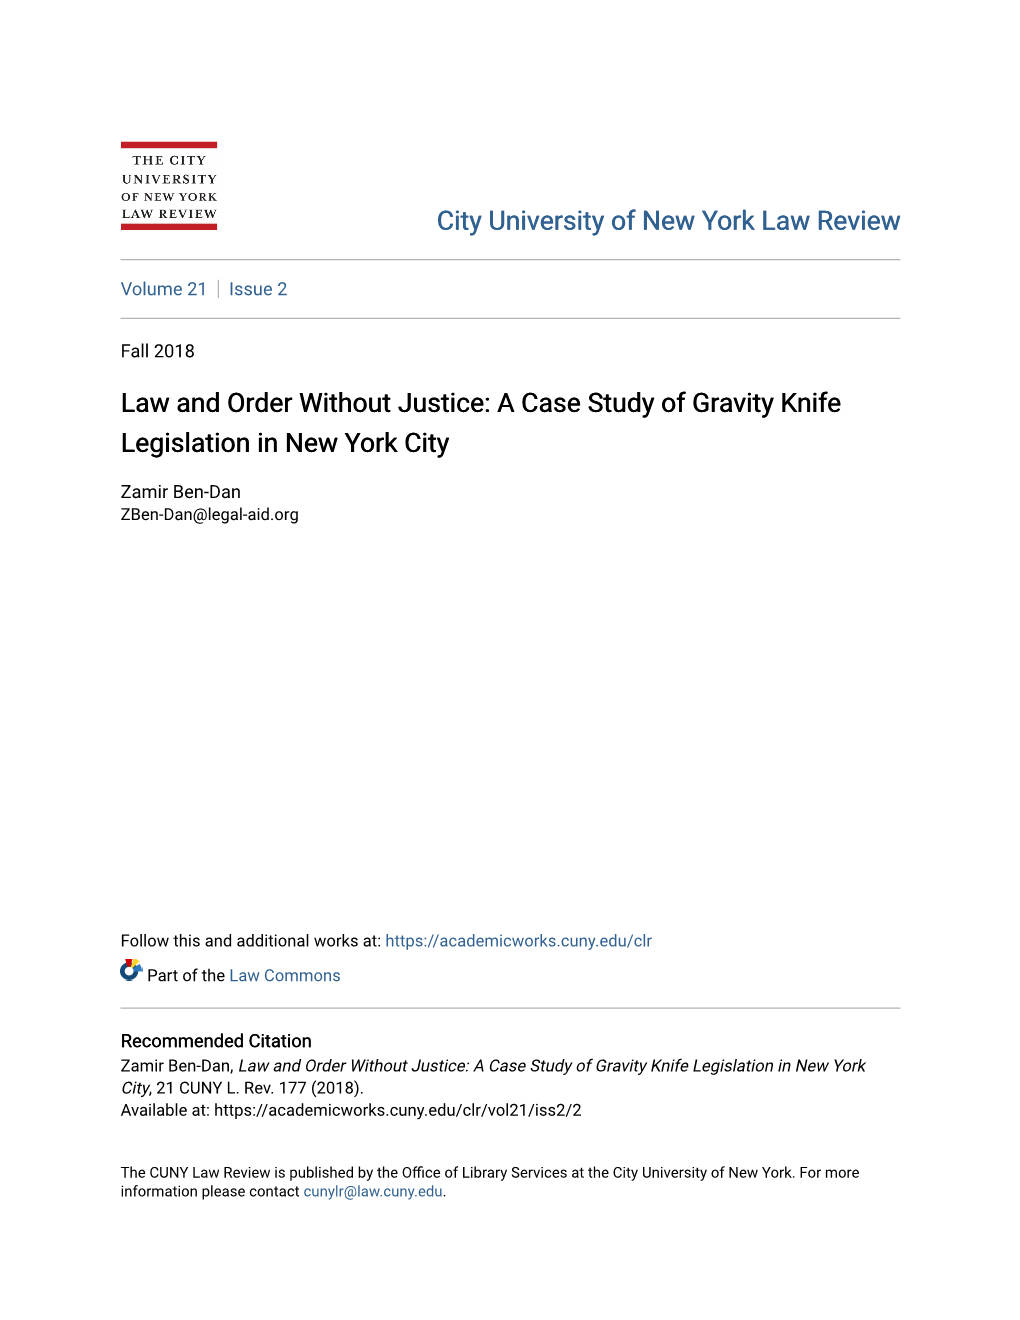 A Case Study of Gravity Knife Legislation in New York City